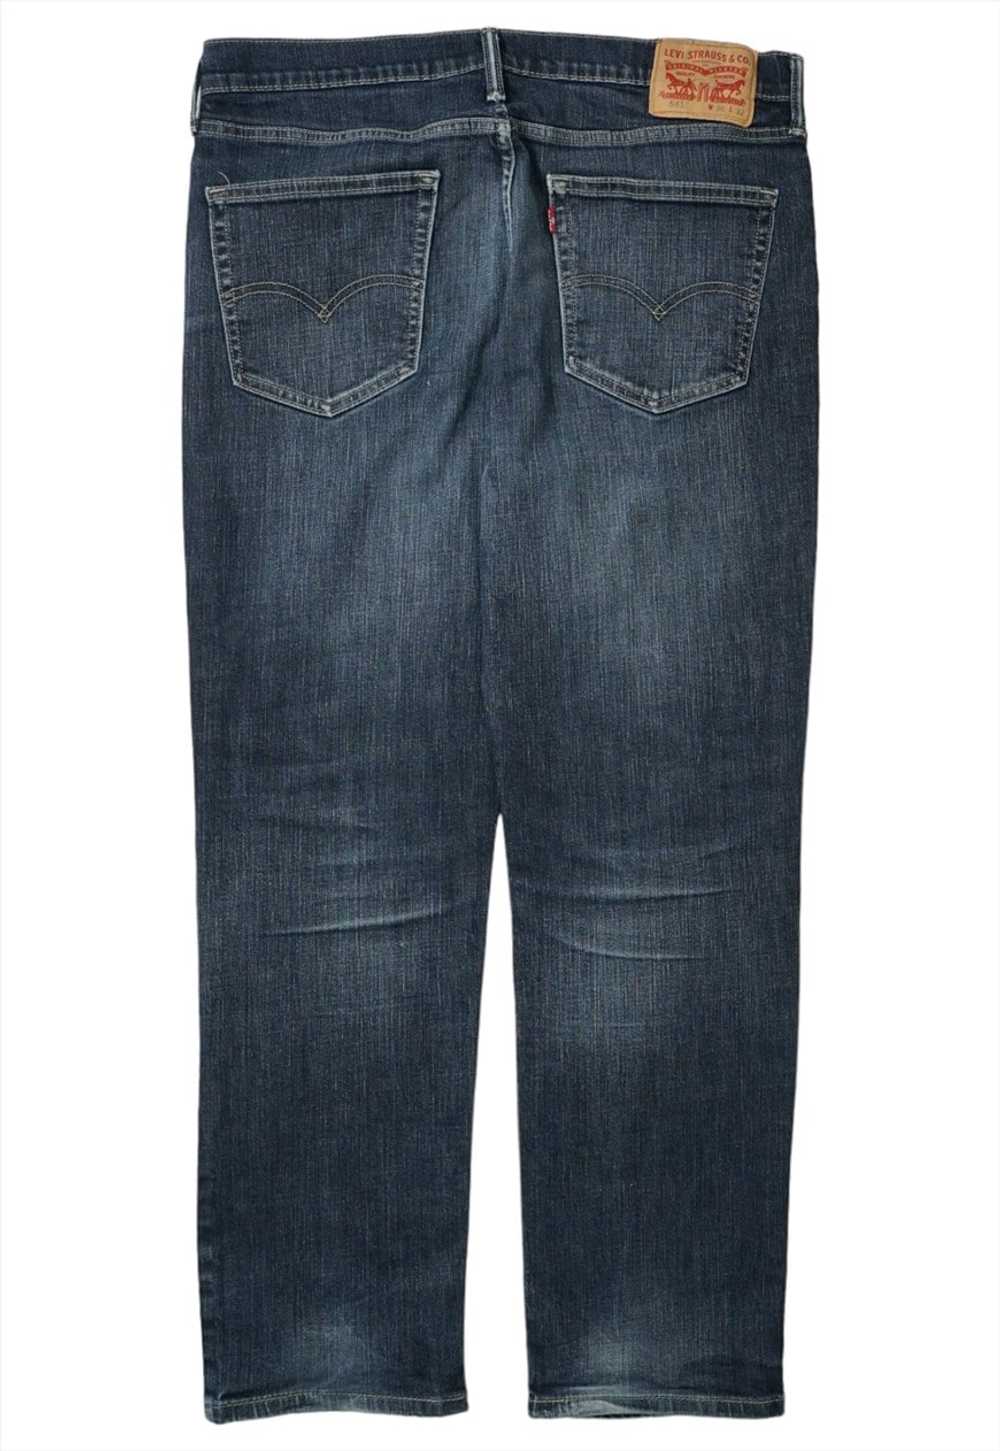 Vintage Levis 541 Blue Straight Jeans Womens - image 2